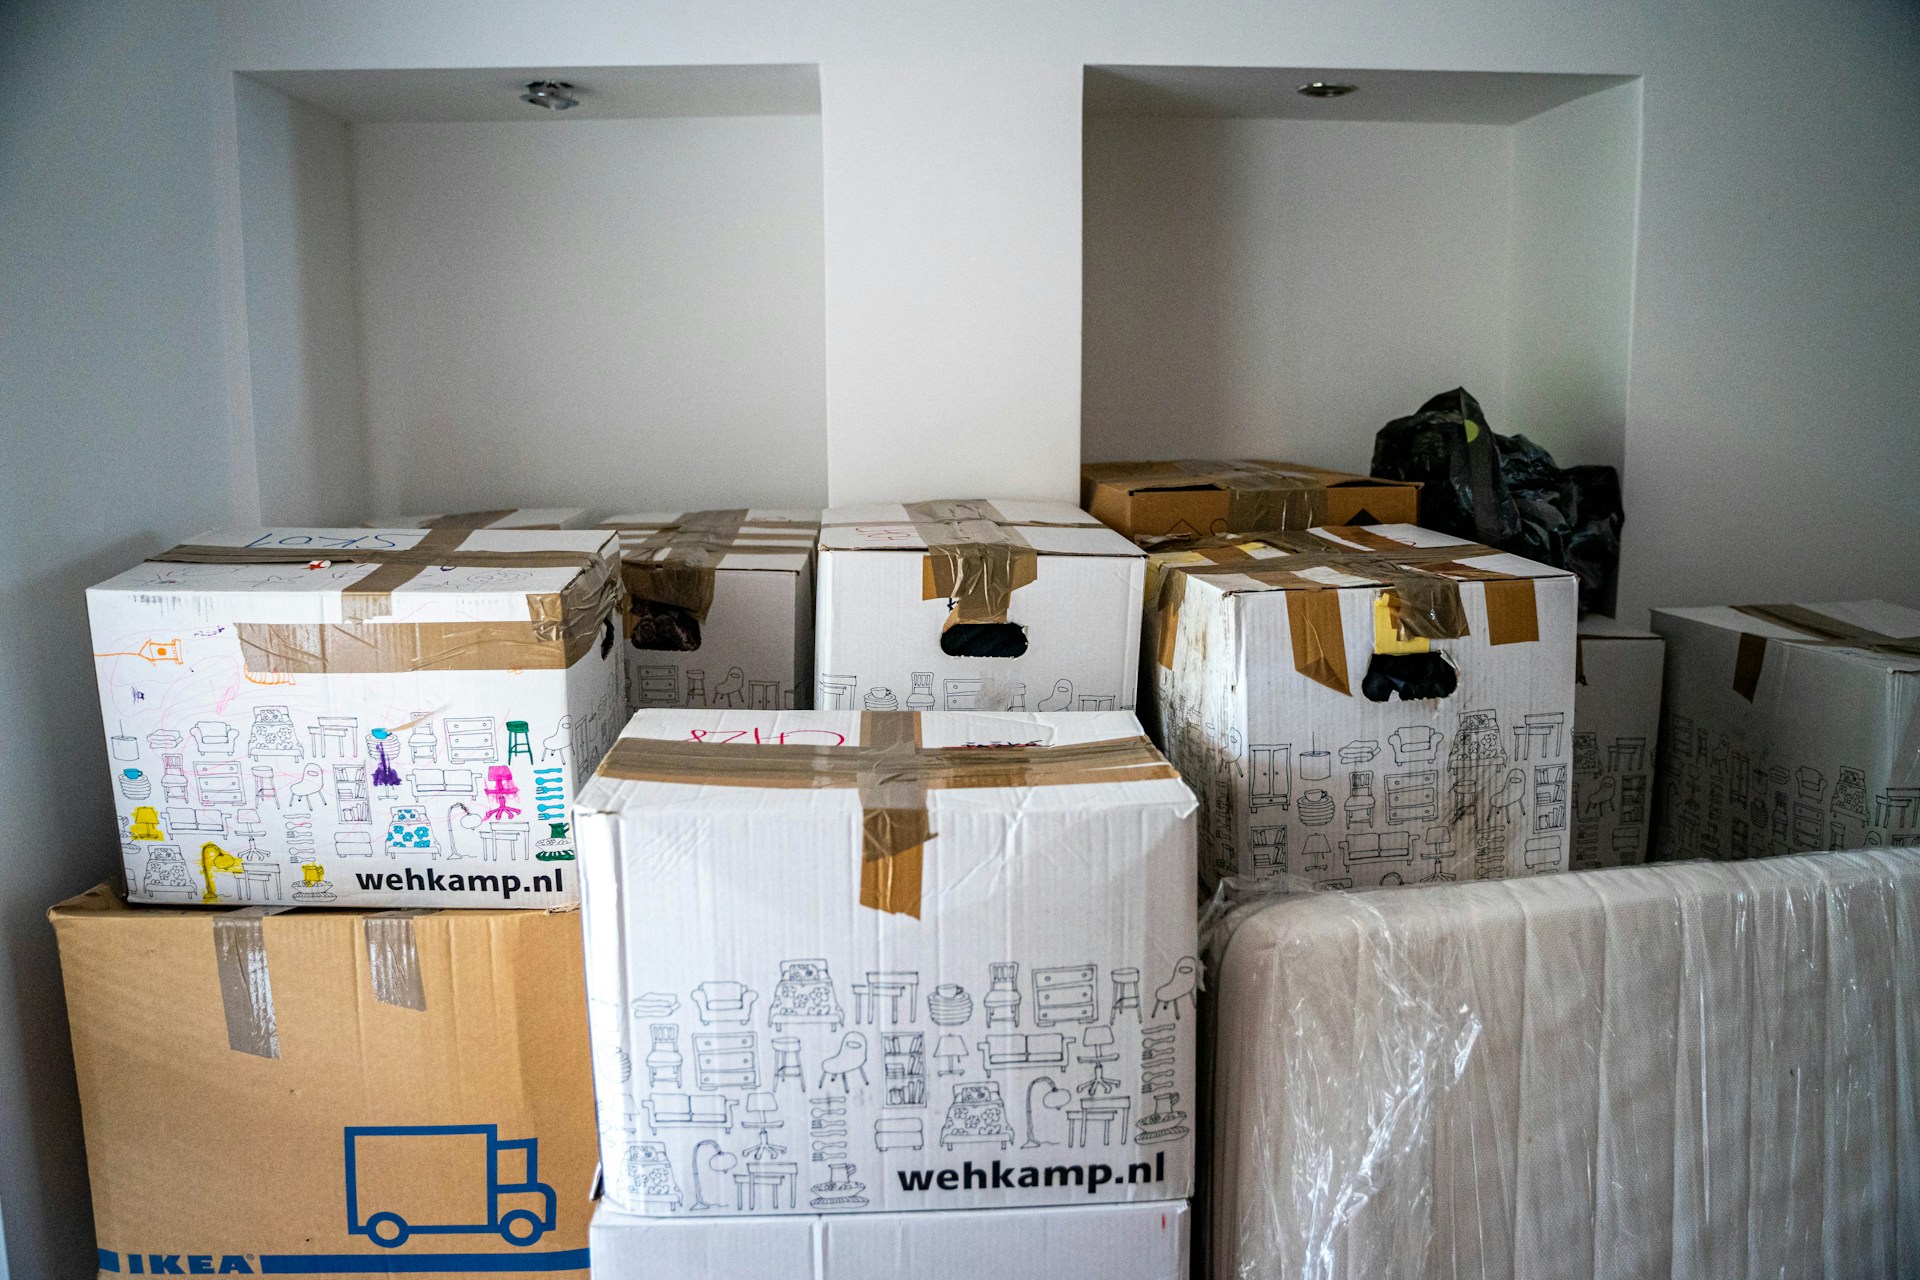 Moving boxes (photo by Michael B, Unsplash)